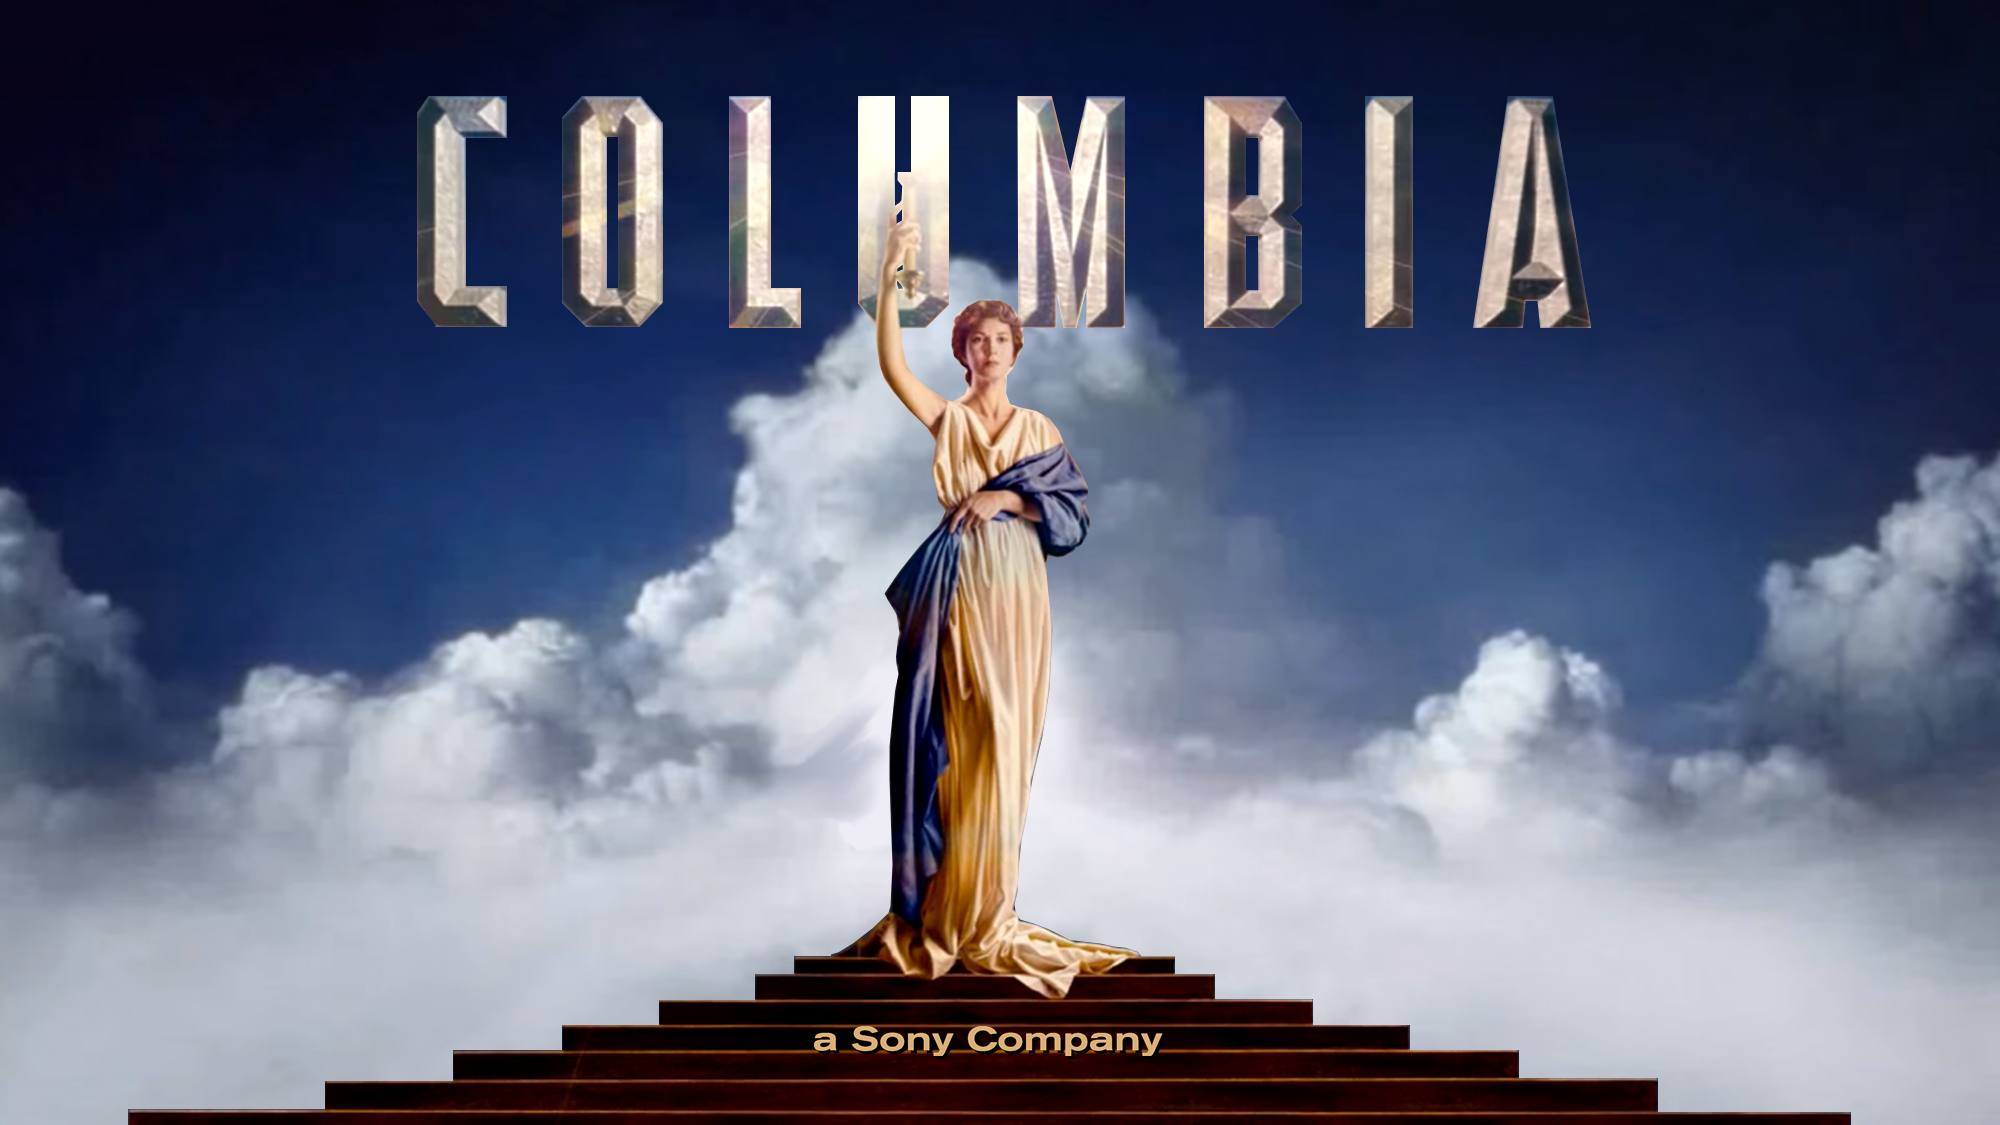 Заставка пикчерс. Киностудия коламбия Пикчерз. Логотип кинокомпании Columbia. Американские кинокомпании.